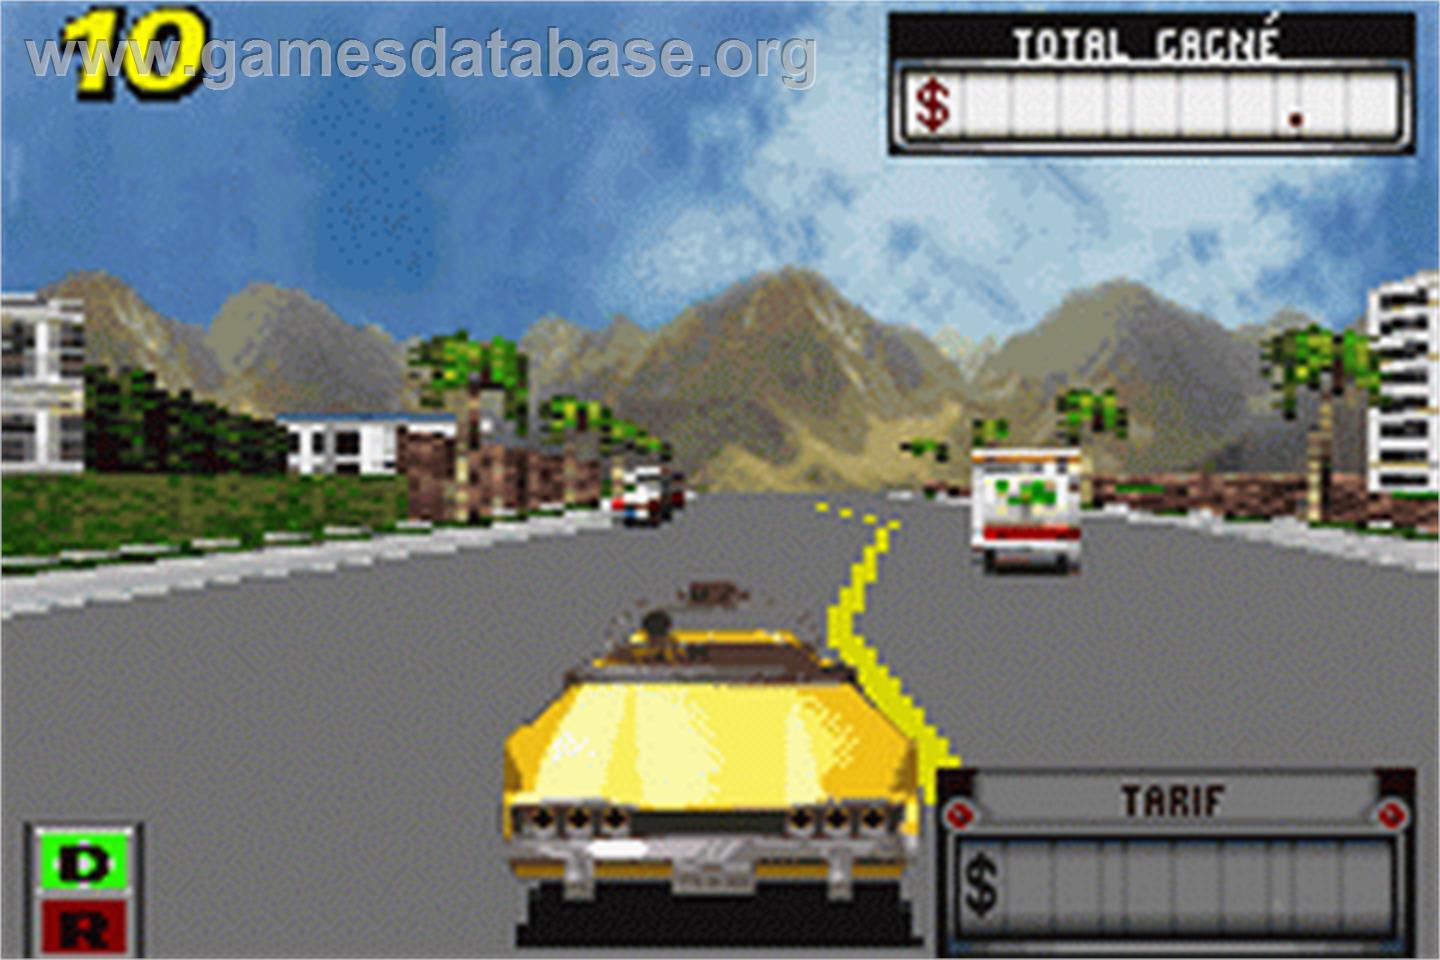 Crazy Taxi: Catch a Ride - Nintendo Game Boy Advance - Artwork - In Game